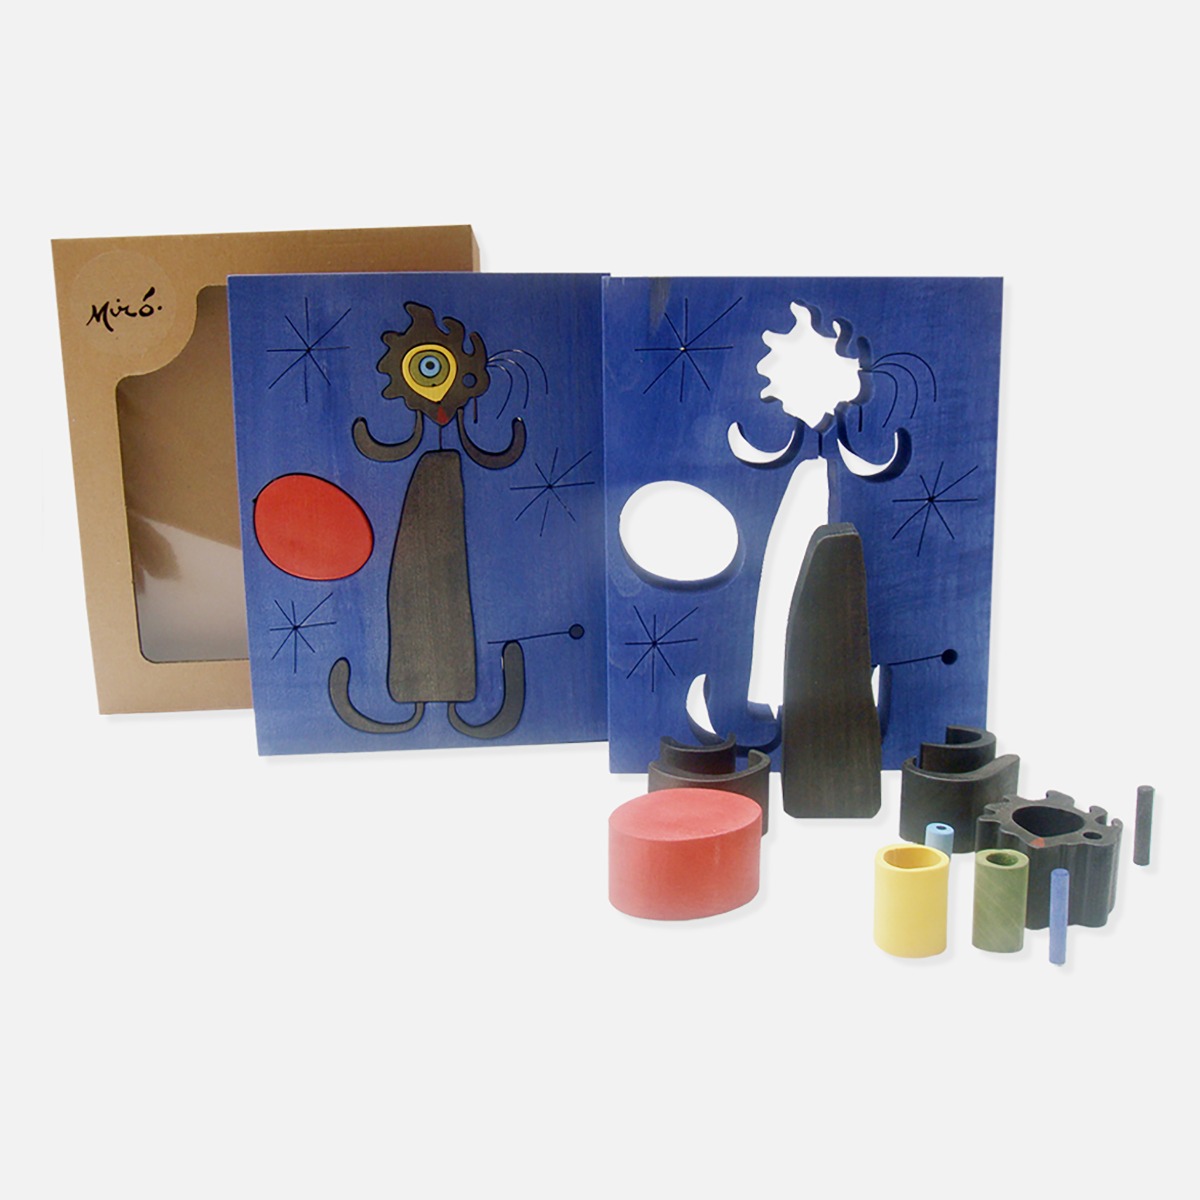 Joan Miró wooden jigsaw puzzle